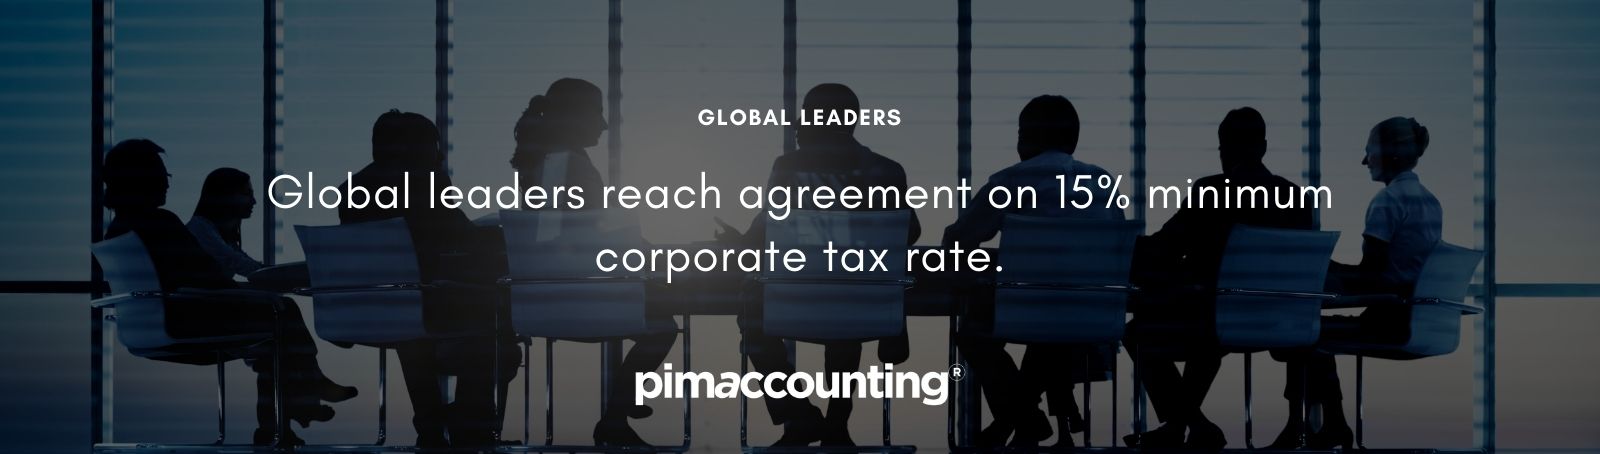 Global leaders reach agreement on 15% minimum corporate tax rate